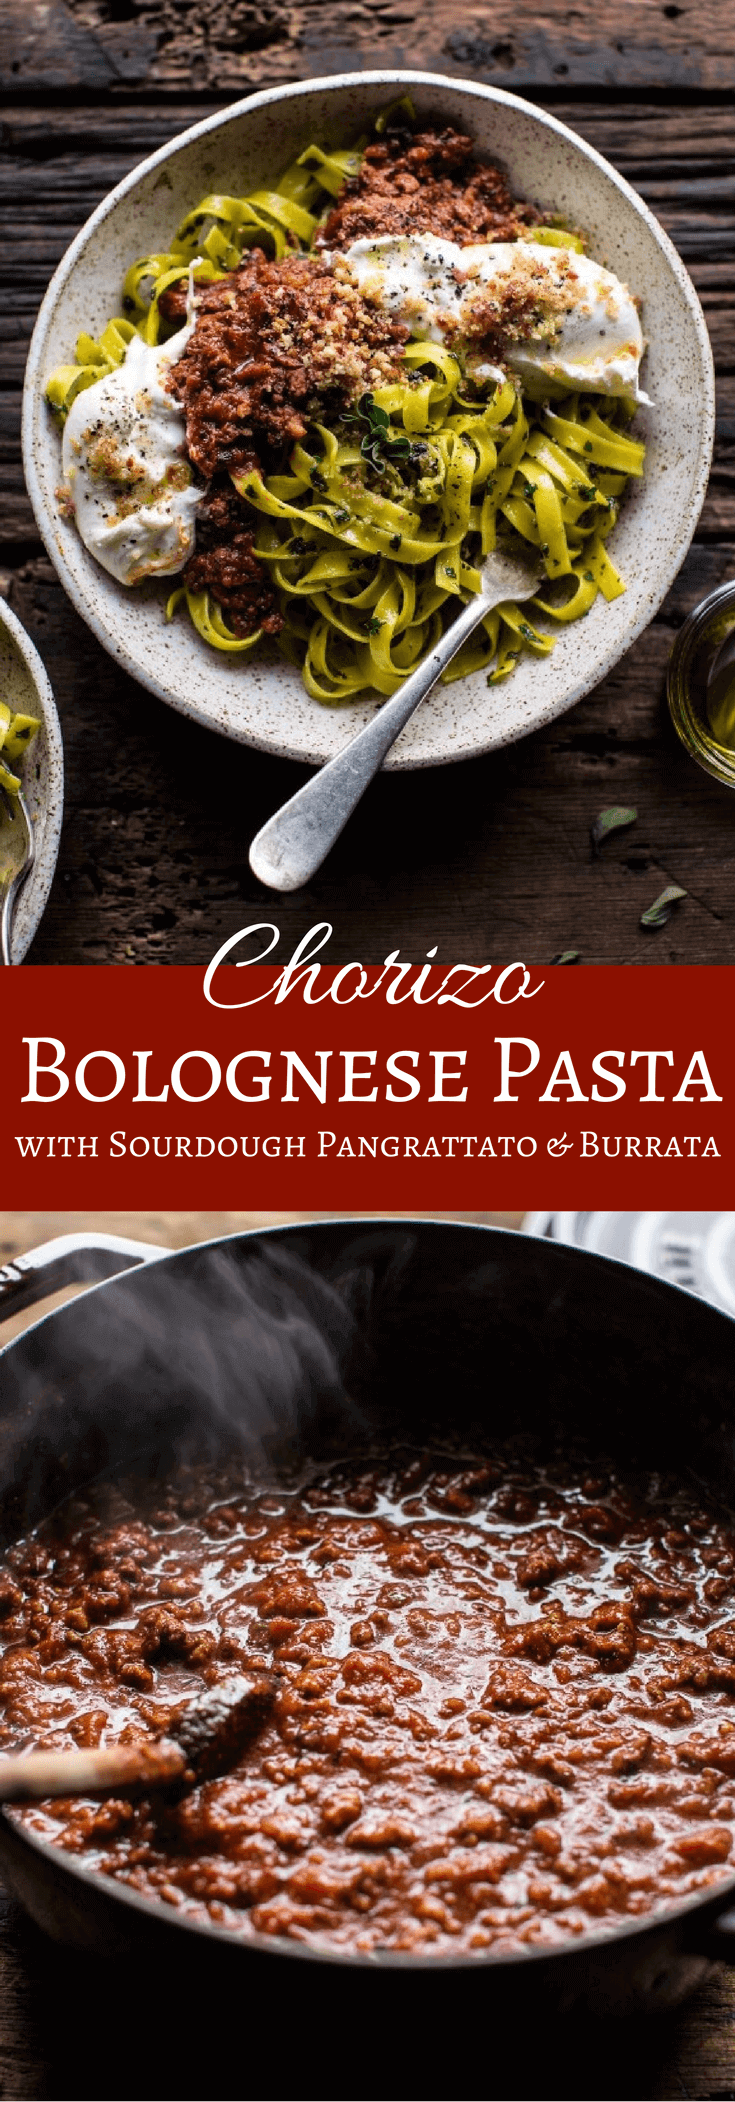 Chorizo Bolognese Pasta with Sourdough Pangrattato + Burrata | halfbakedharvest.com @hbharvest